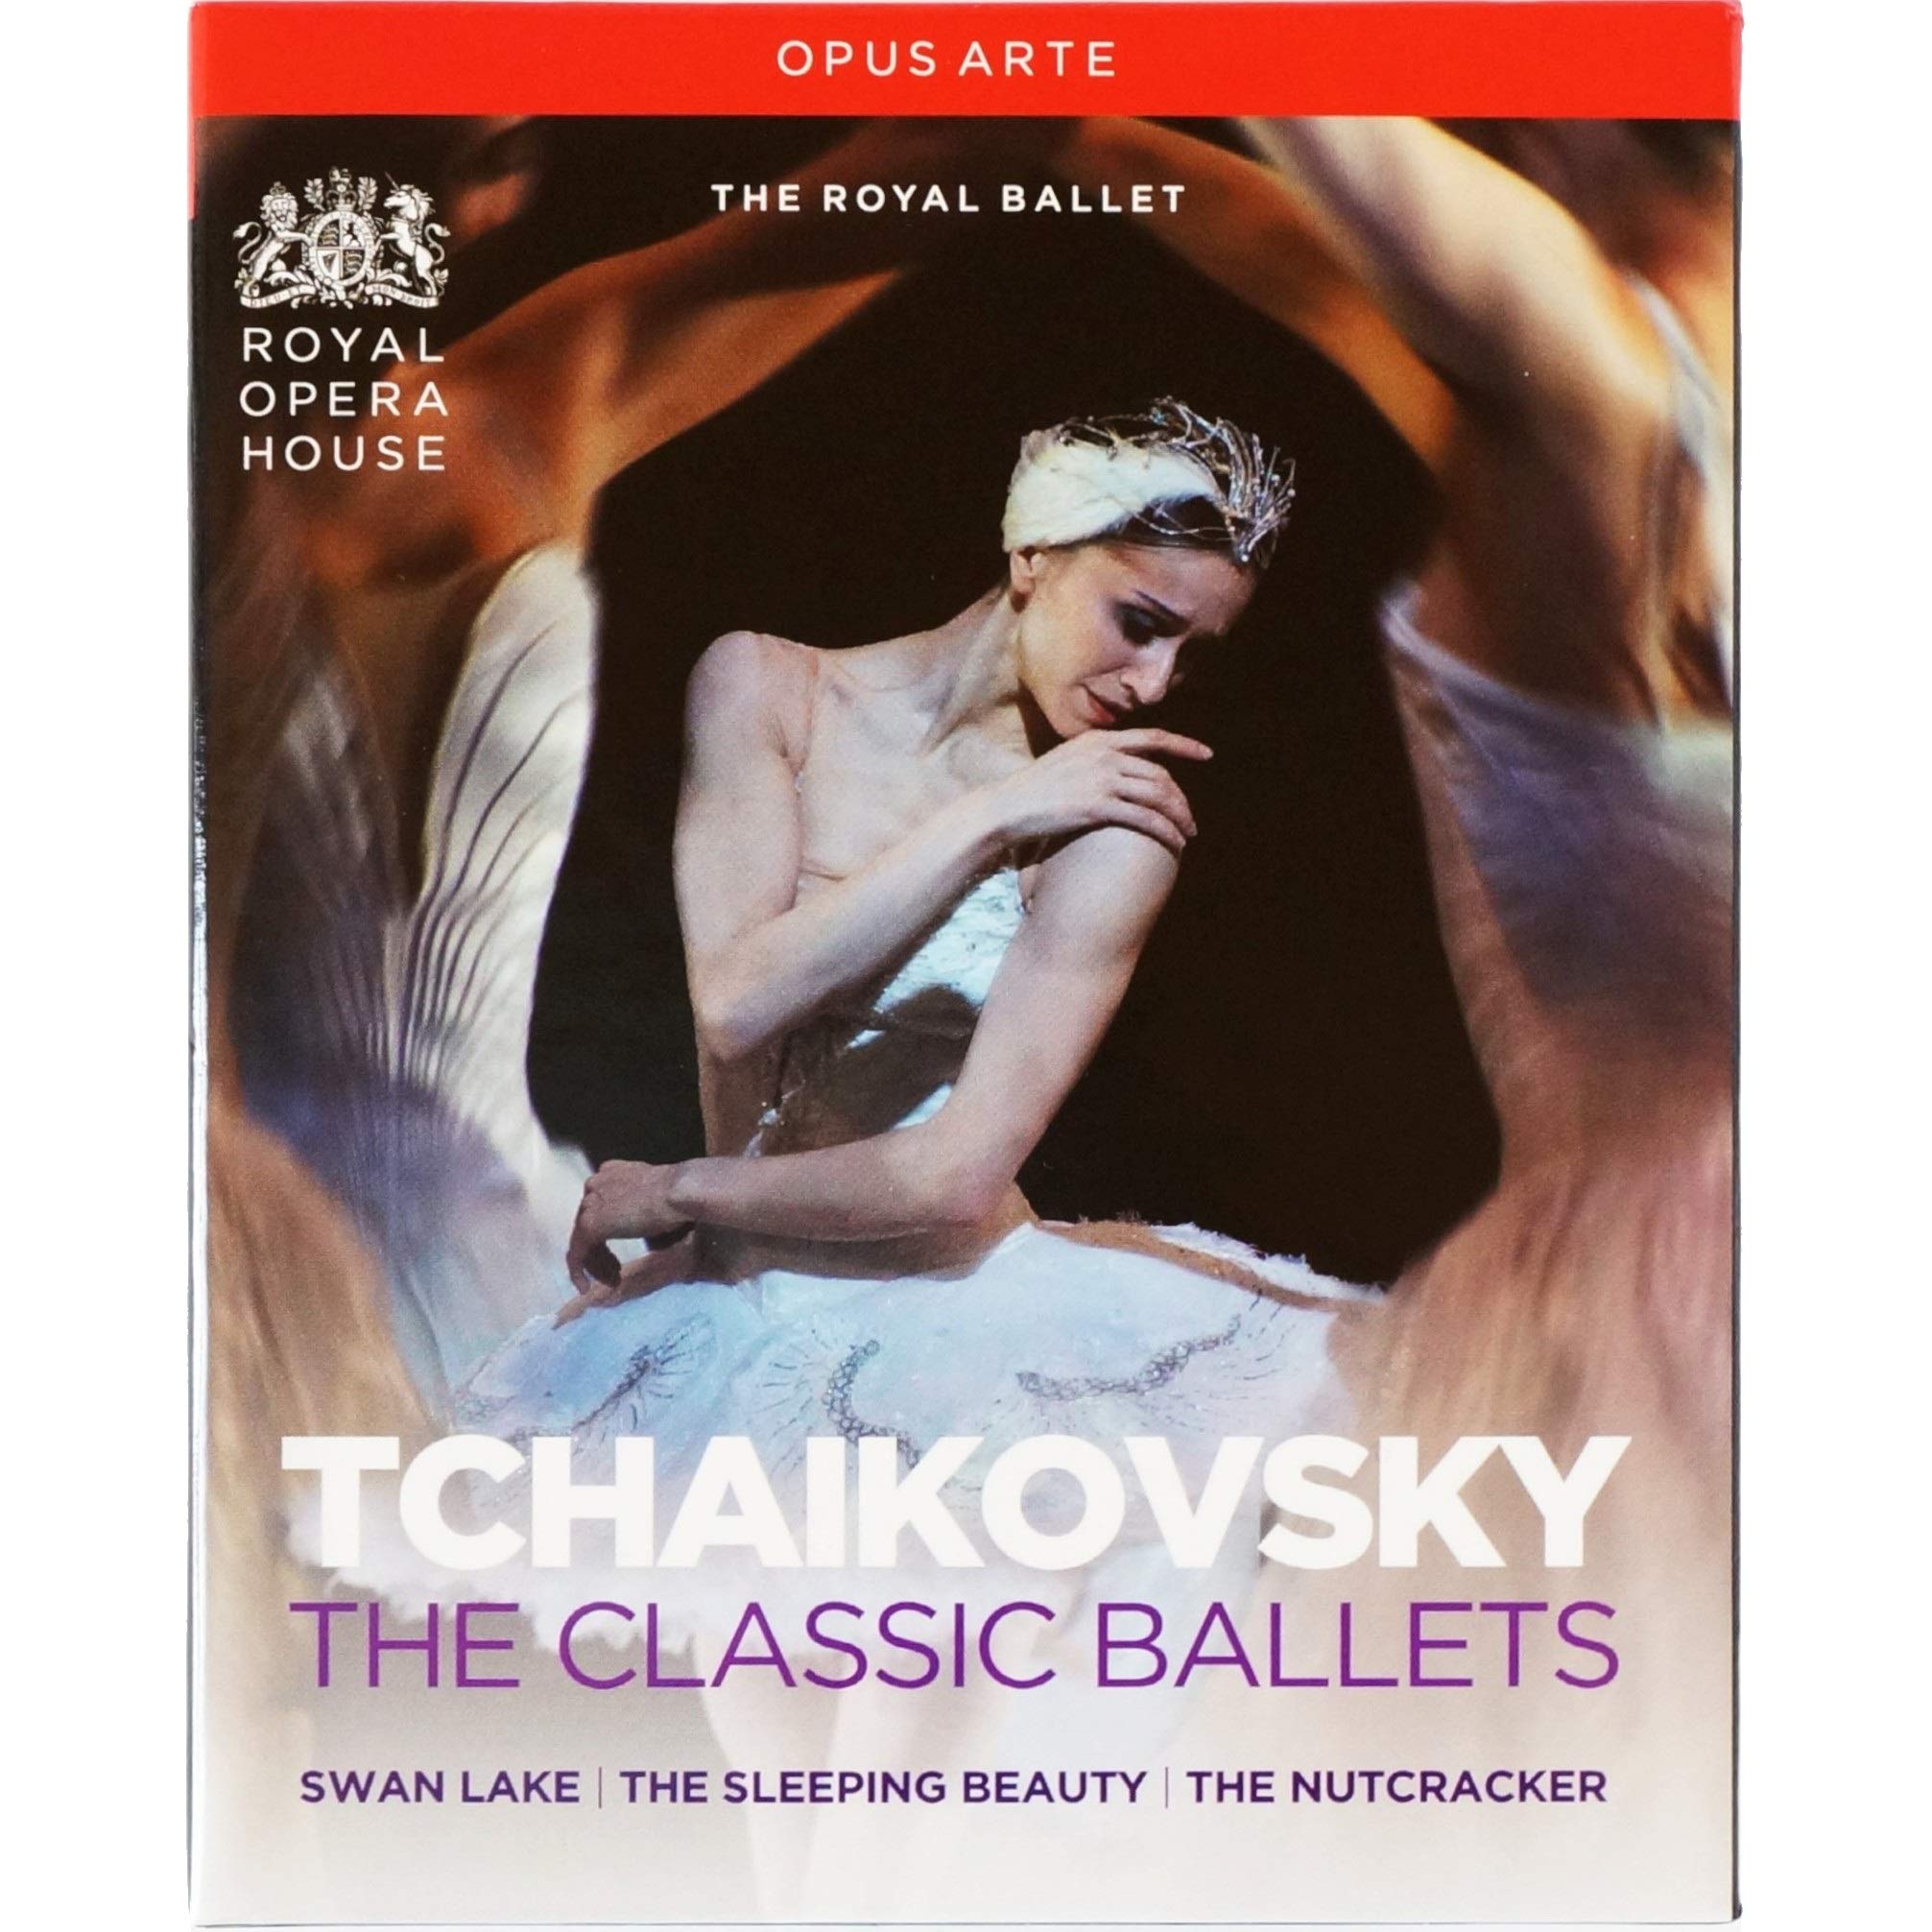 Tschaikowsky: The Classic Ballets Box [Blu-ray]